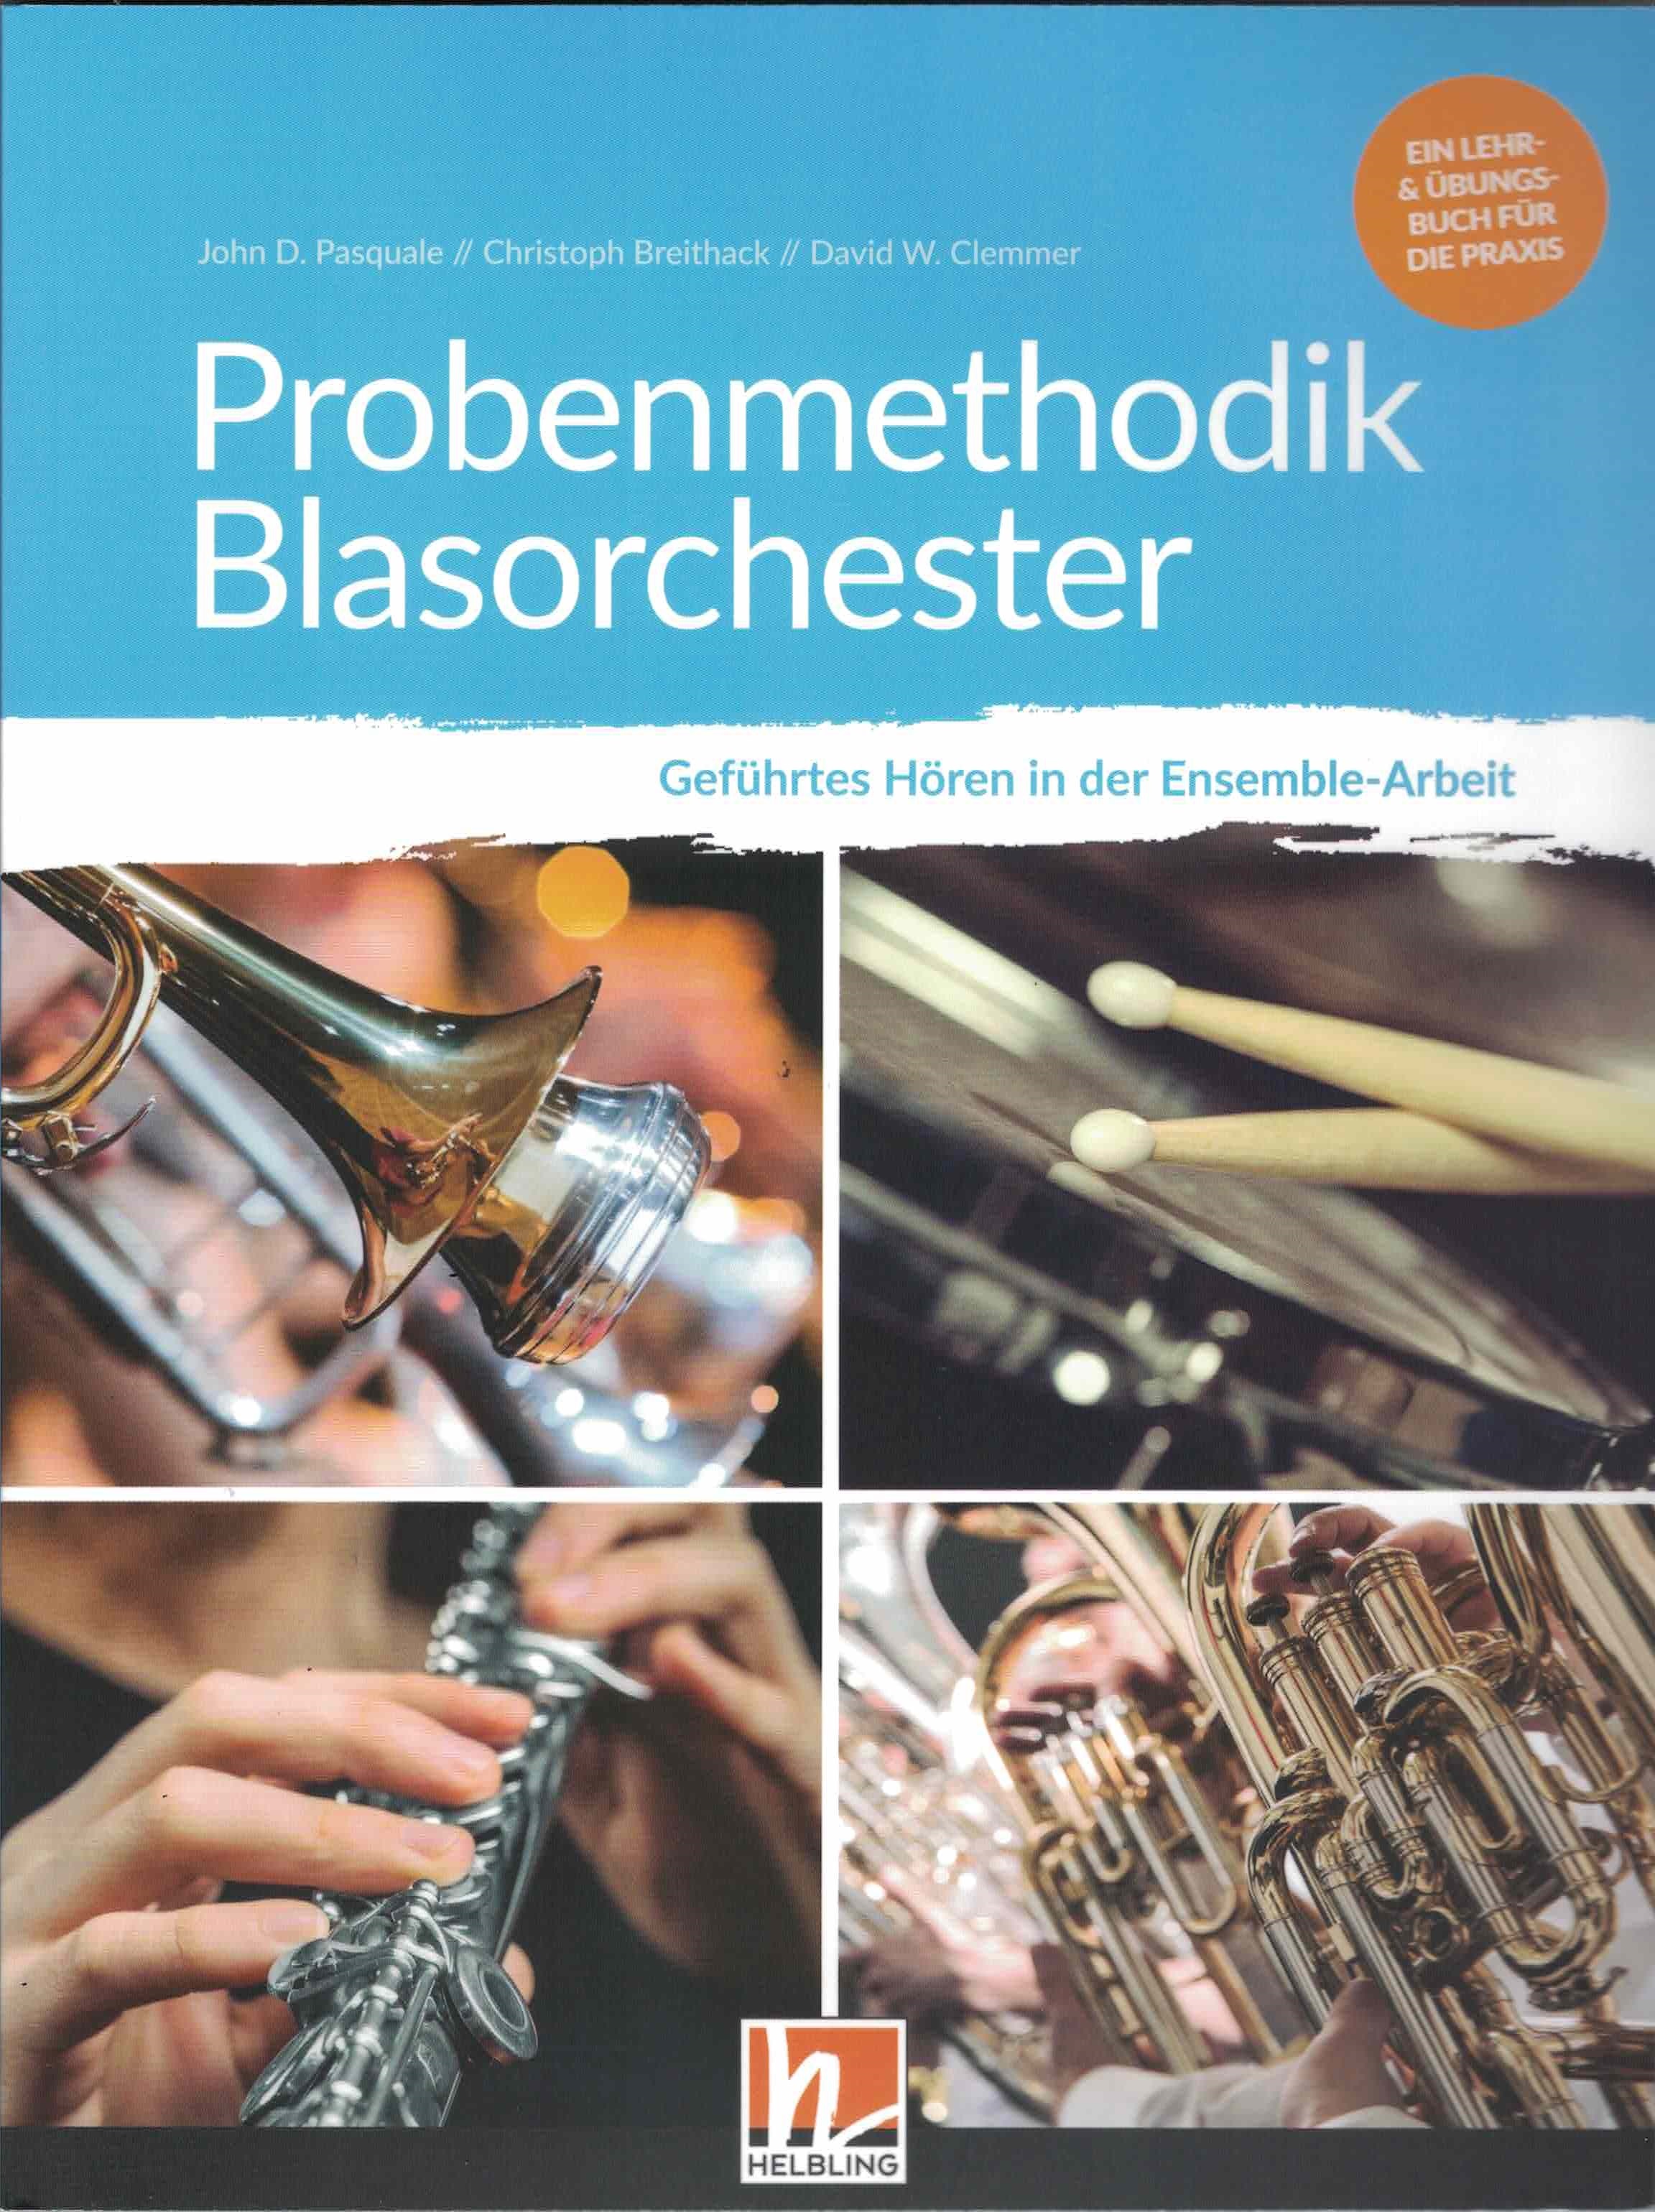 Probenmethodik Blasorchester, J.D. Pasquale, C, Breithack, D. W. Clemmer